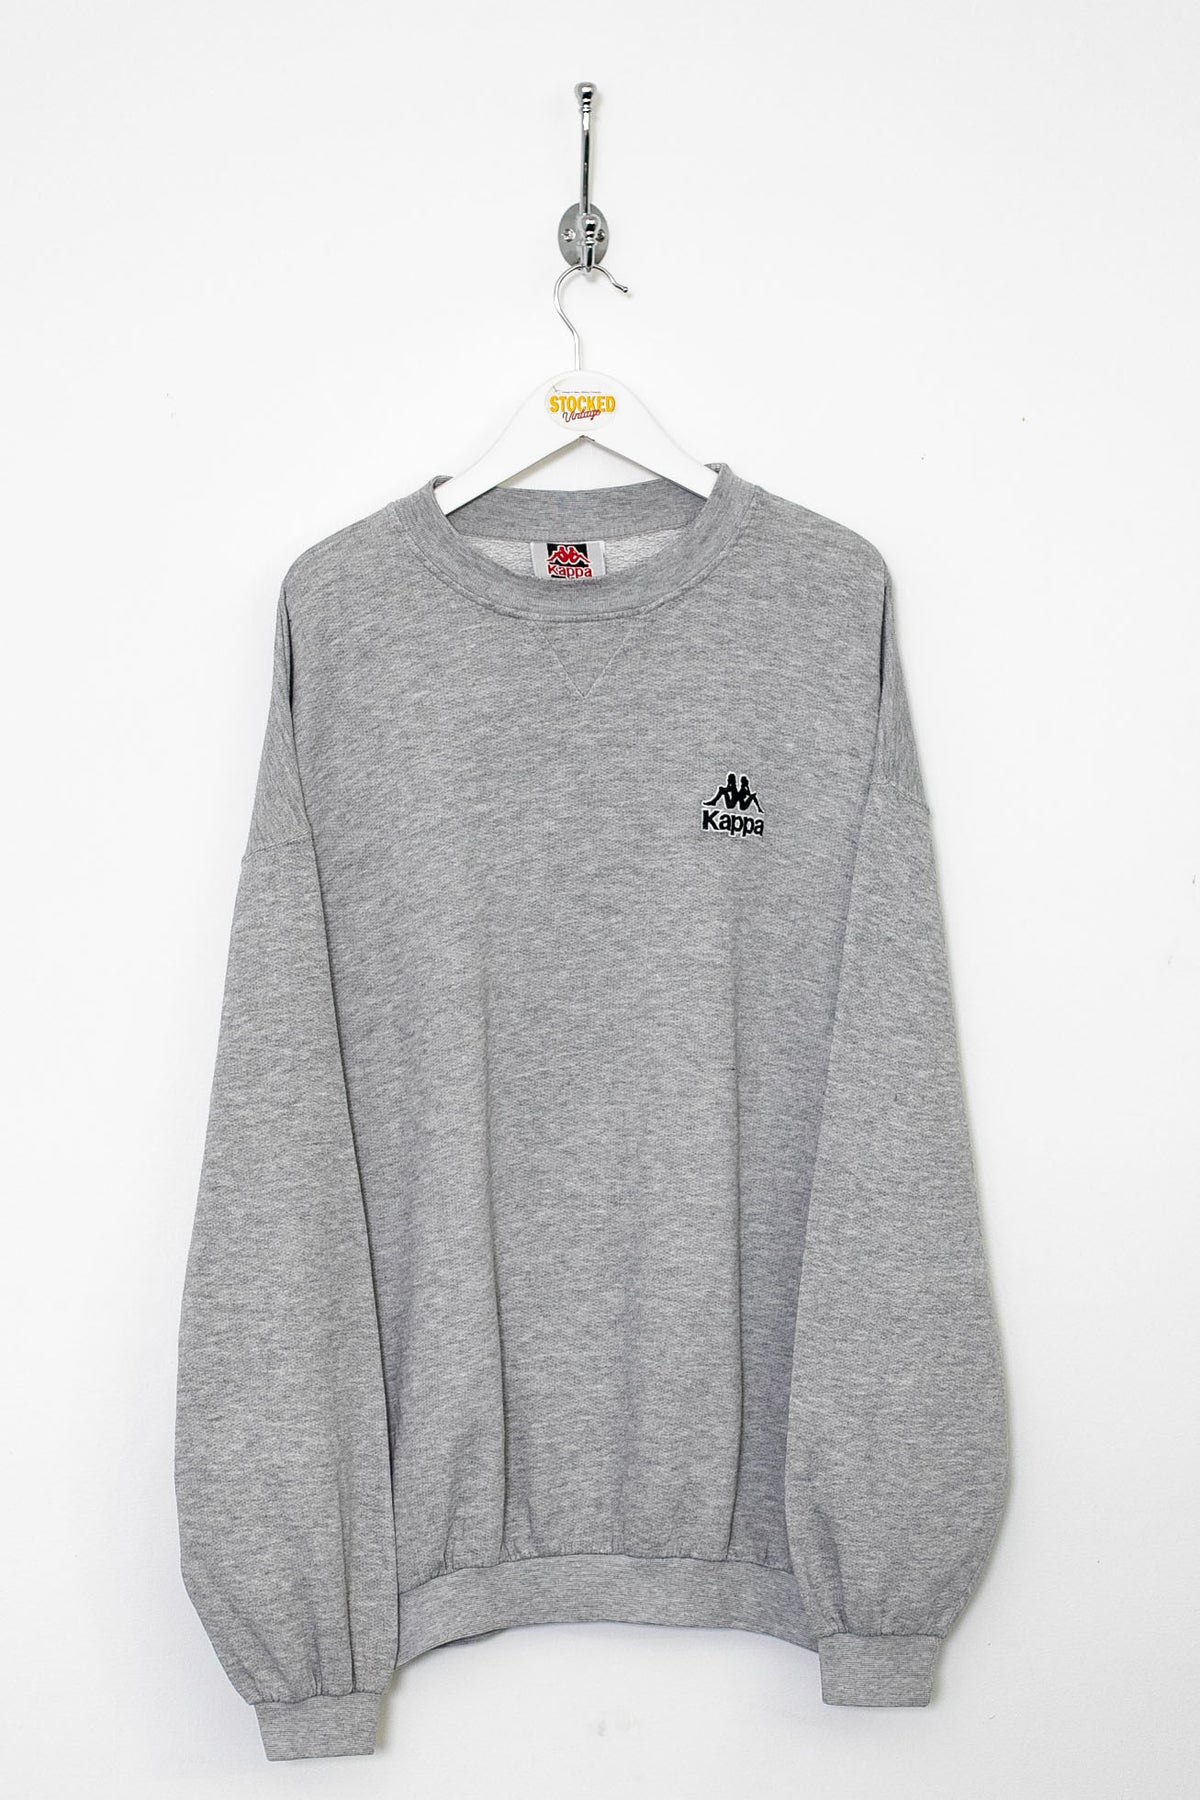 00s Kappa Sweatshirt (XL)